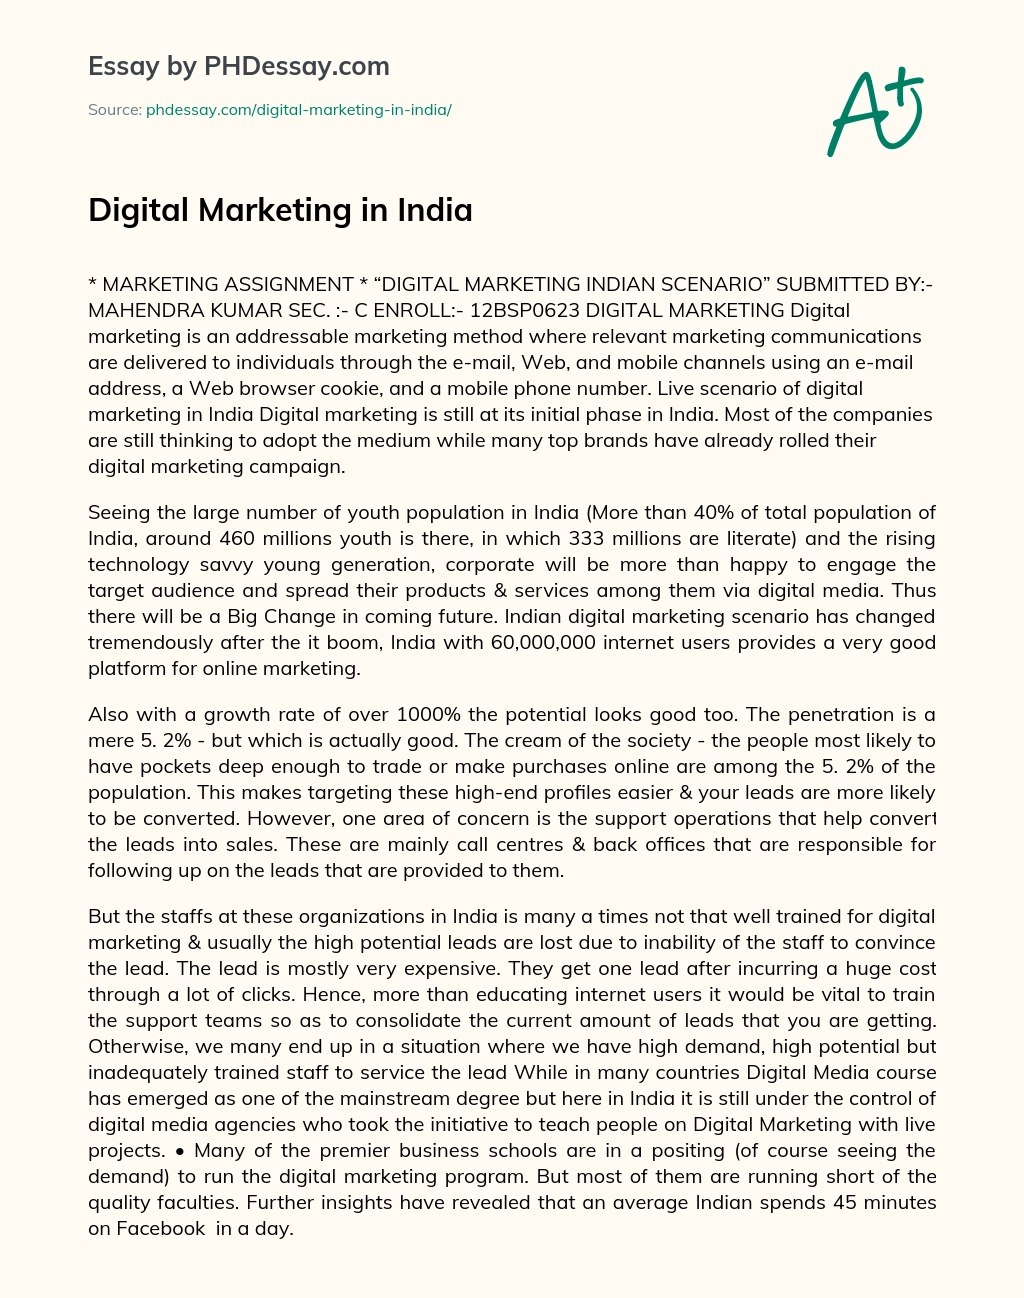 Digital Marketing in India essay